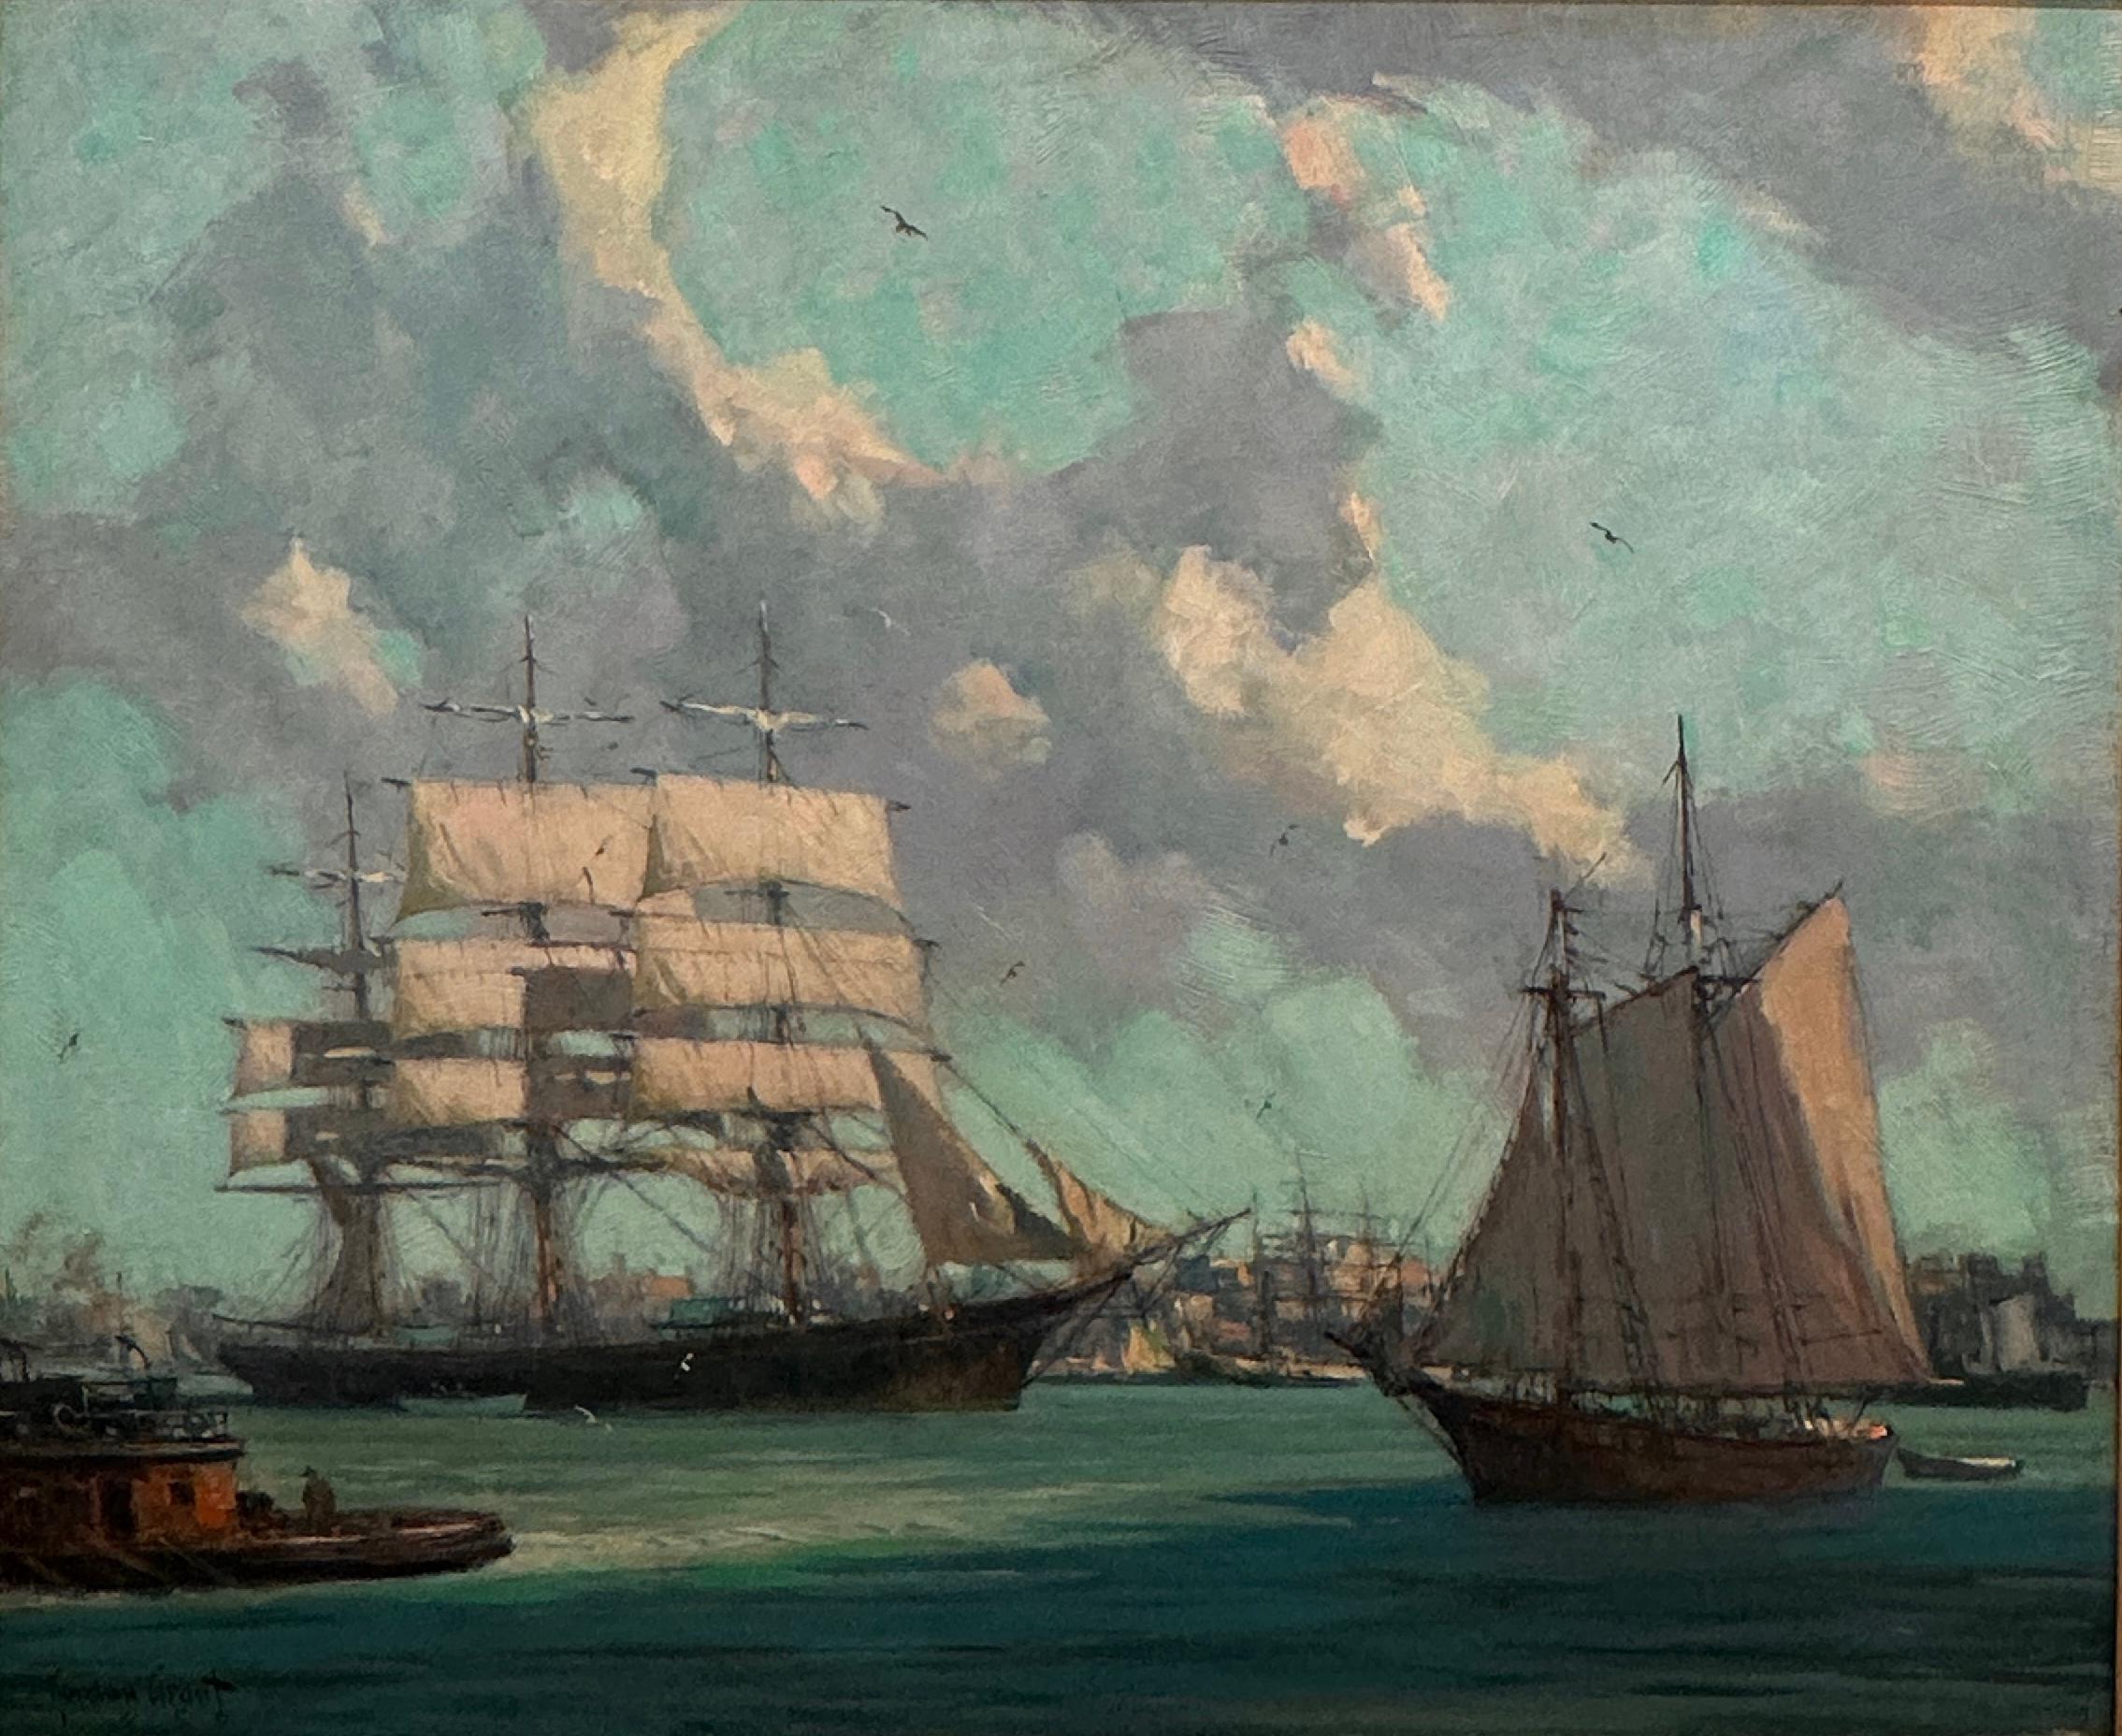 Gordon Grant Landscape Painting - "Day of Sail" - prominent American artist, Marine Art